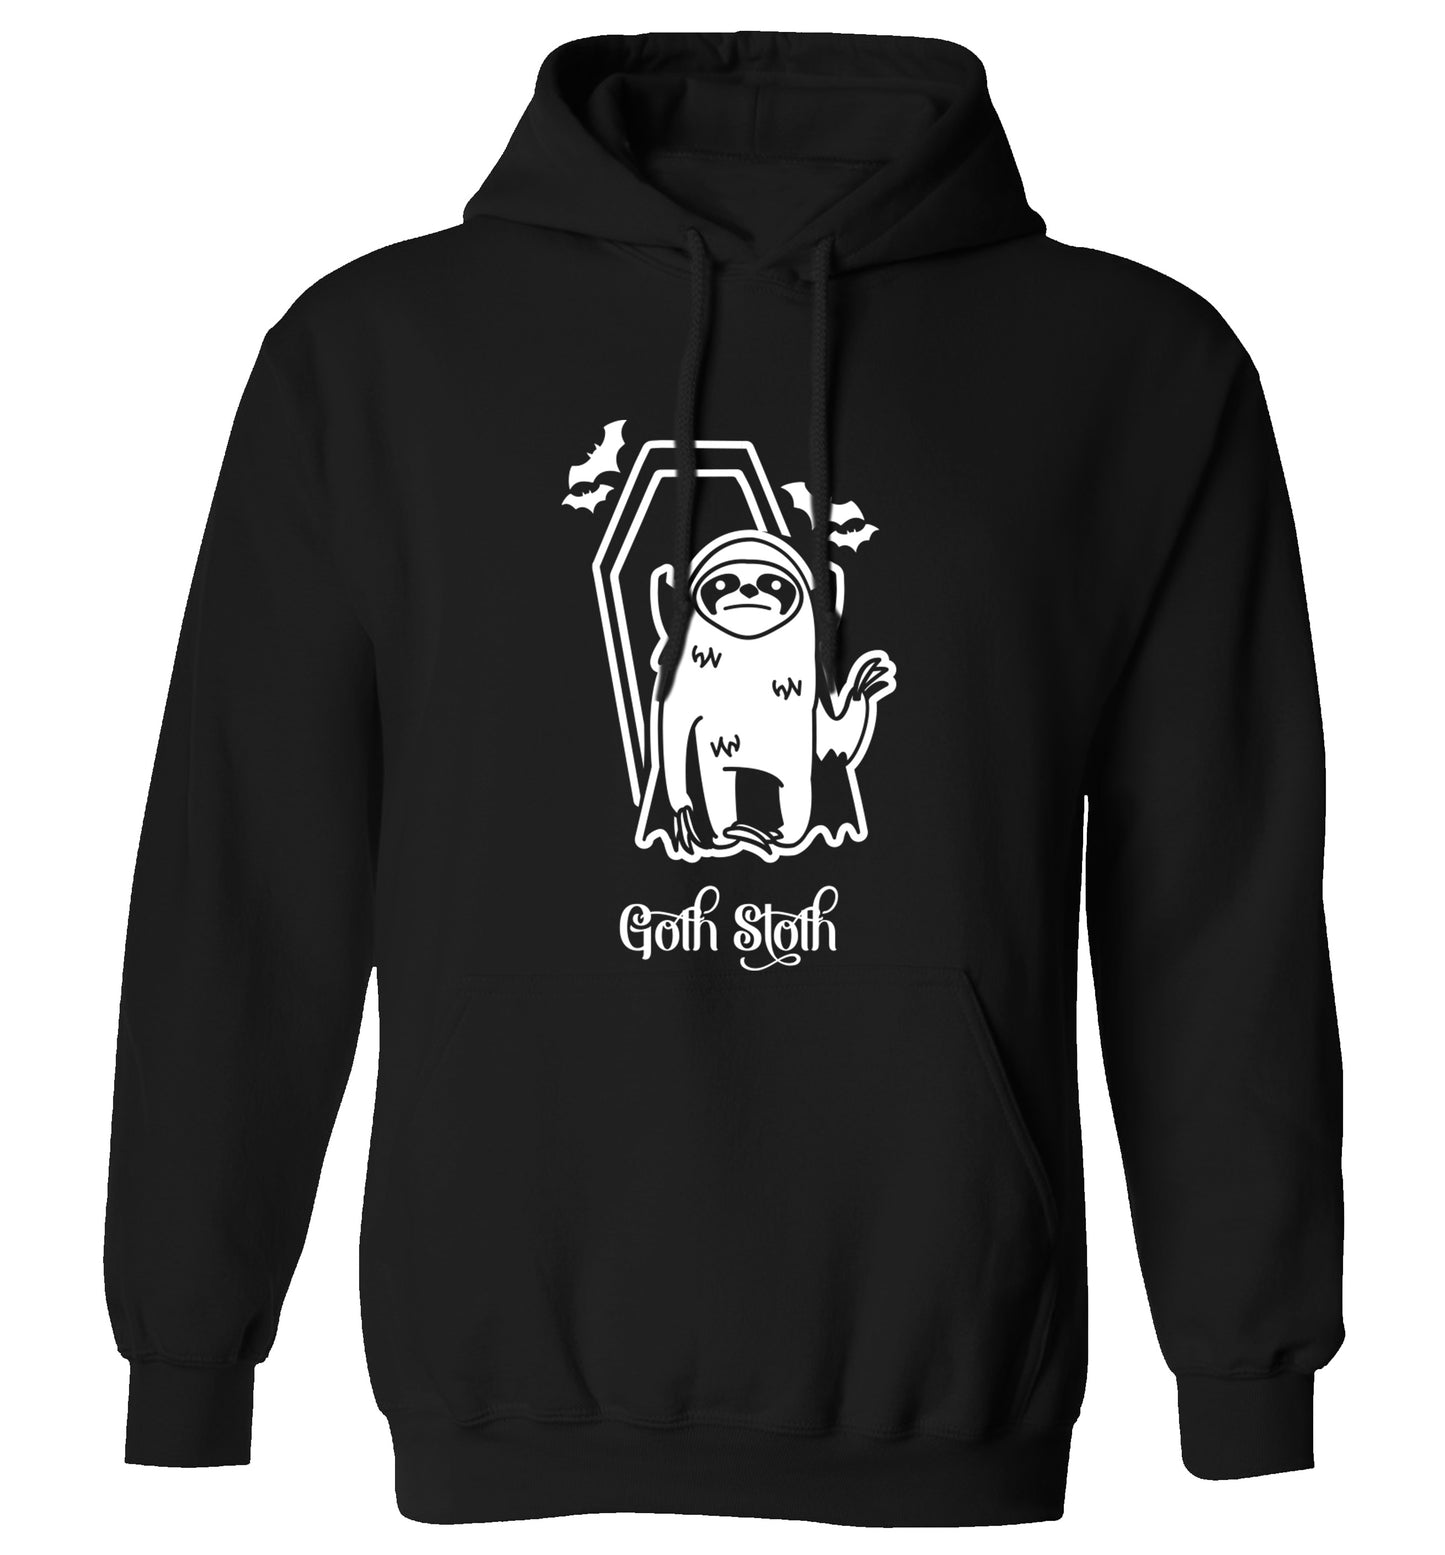 Goth Sloth adults unisex black hoodie 2XL